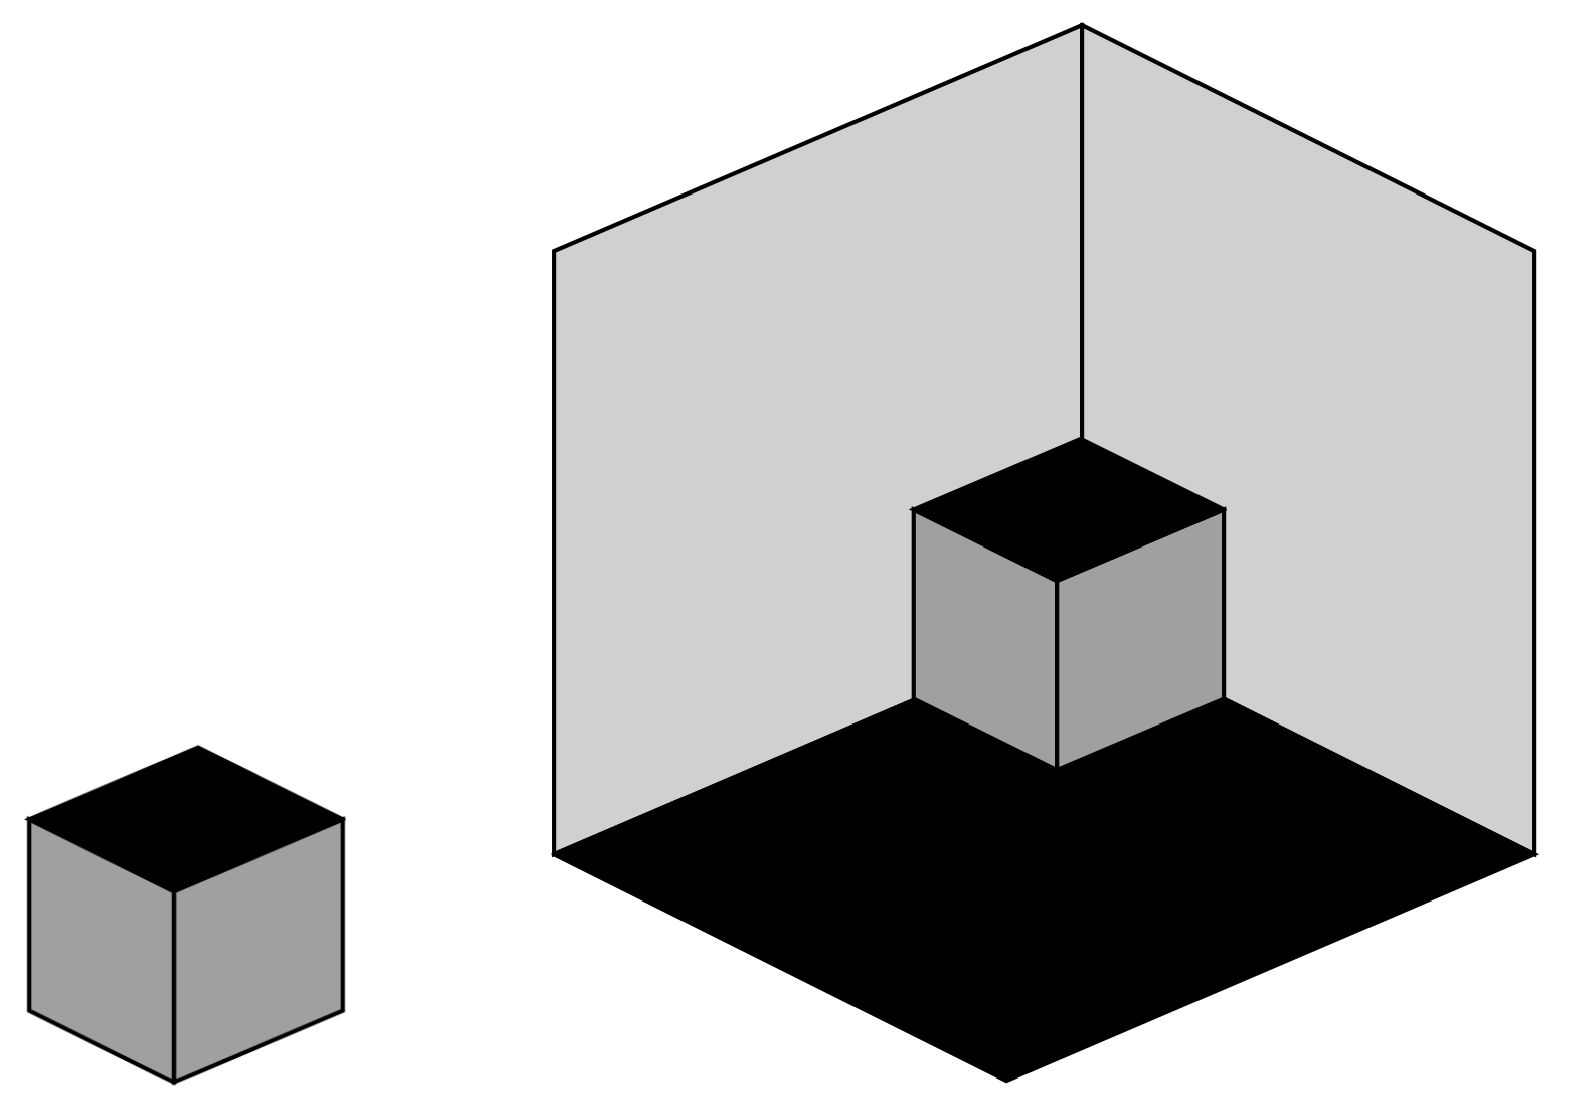 visual illusions cube